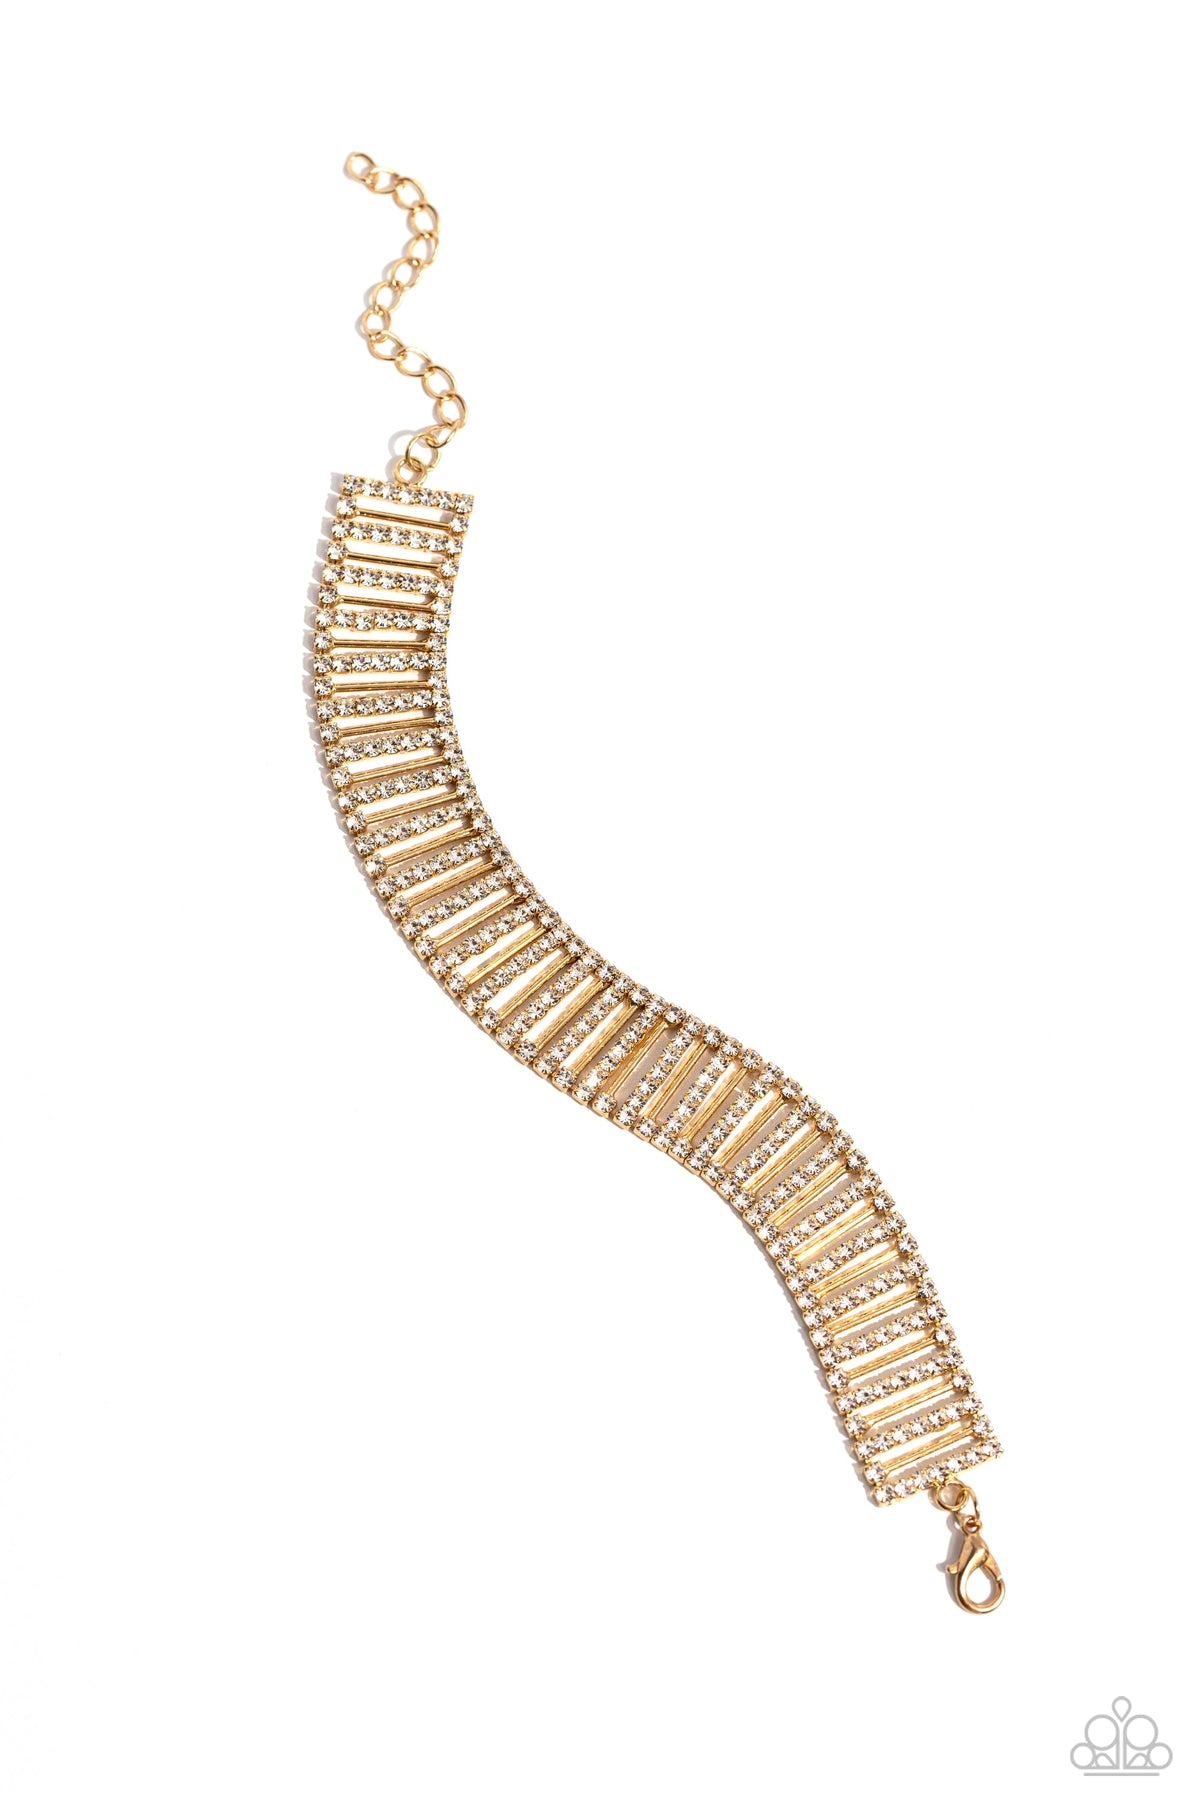 Elusive Elegance Gold &amp; White Rhinestone Bracelet - Paparazzi Accessories- lightbox - CarasShop.com - $5 Jewelry by Cara Jewels